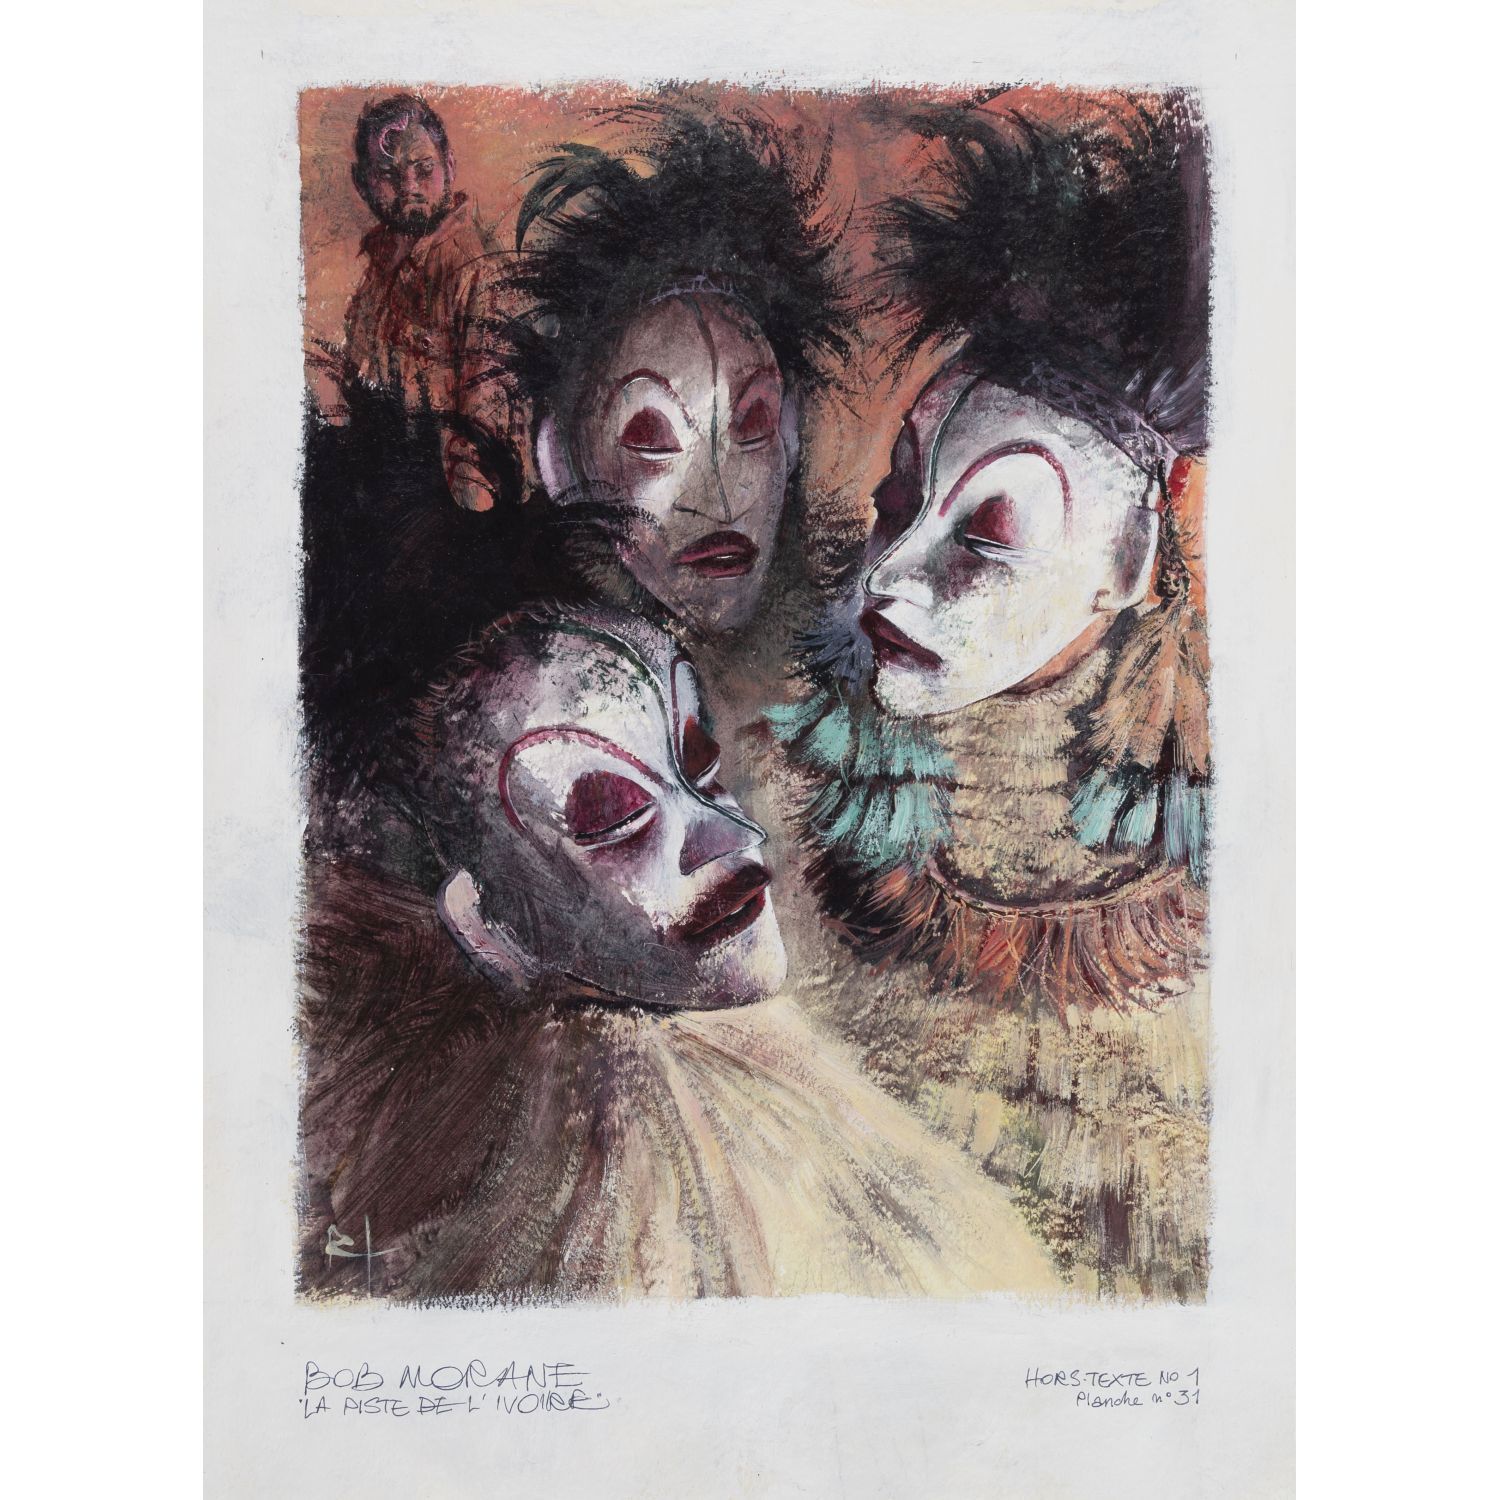 Null * René FOLLET (1931-2020)
Bob Morane, La piste de l'Ivoire, illustration ho&hellip;